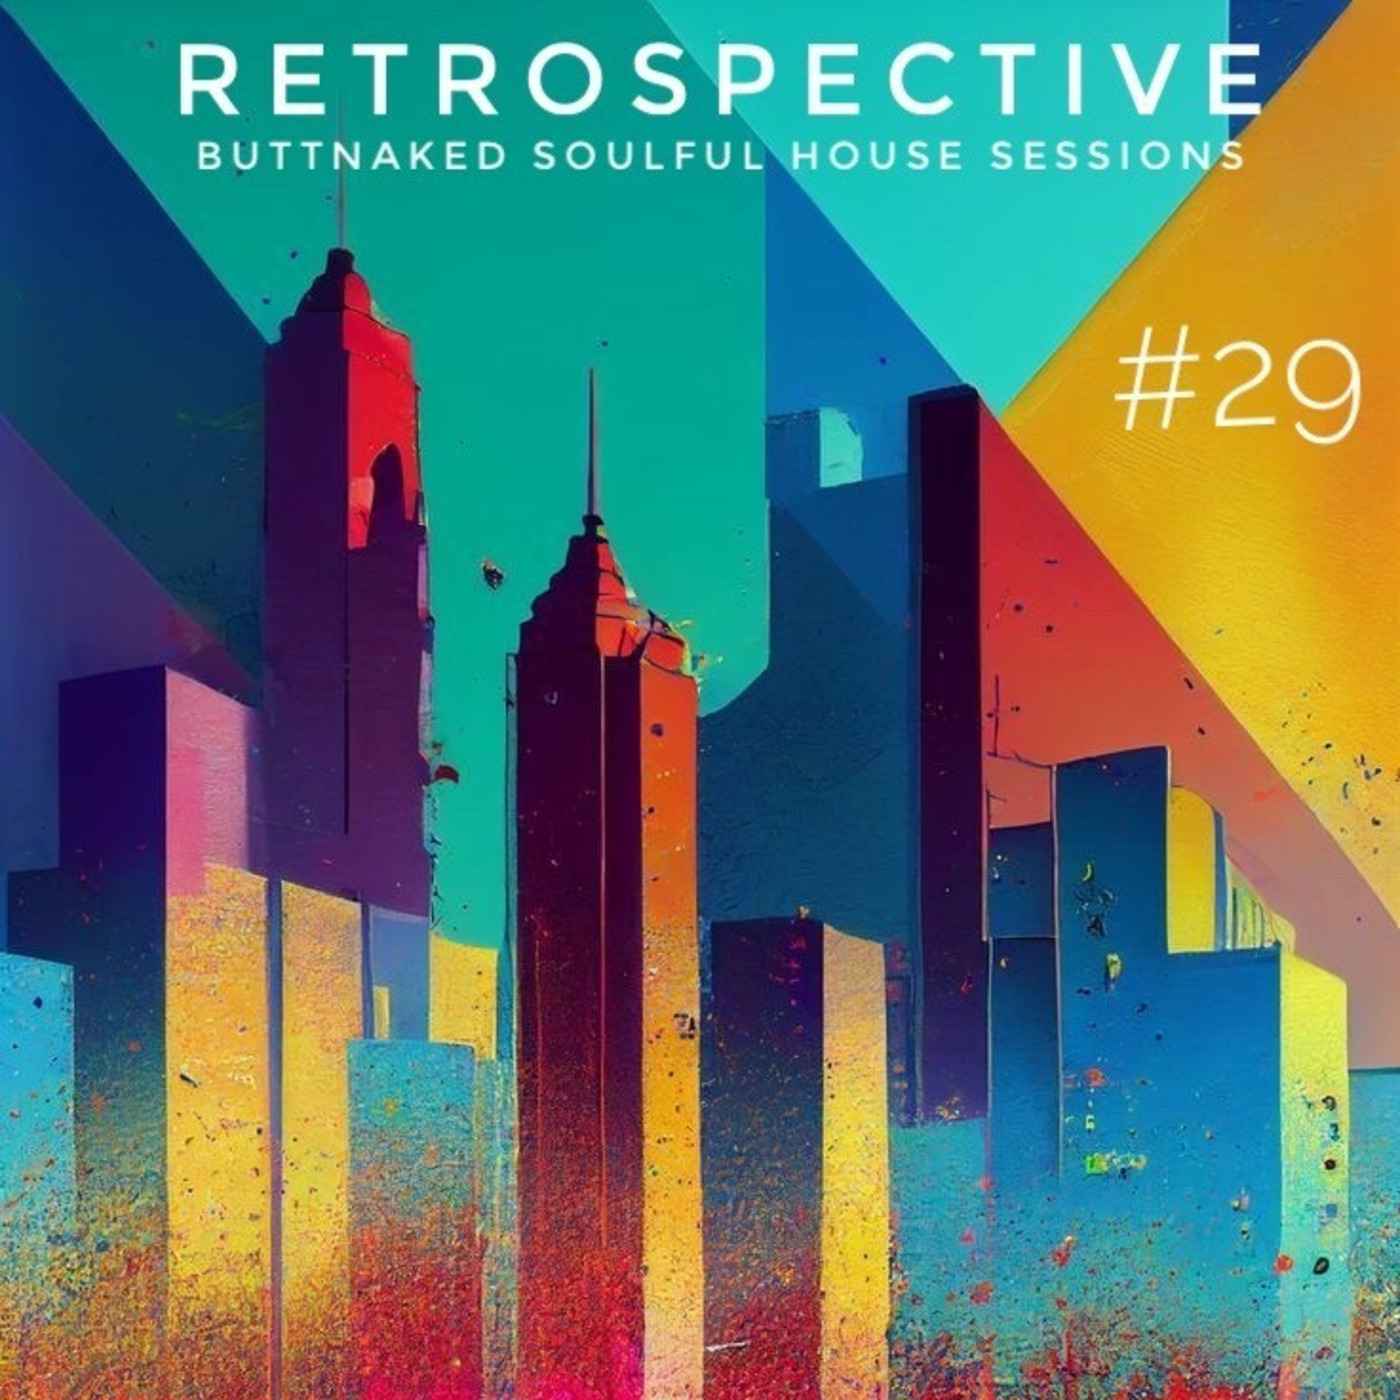 Iain Willis presents Retrospective #29 - Buttnaked Lost Mixes